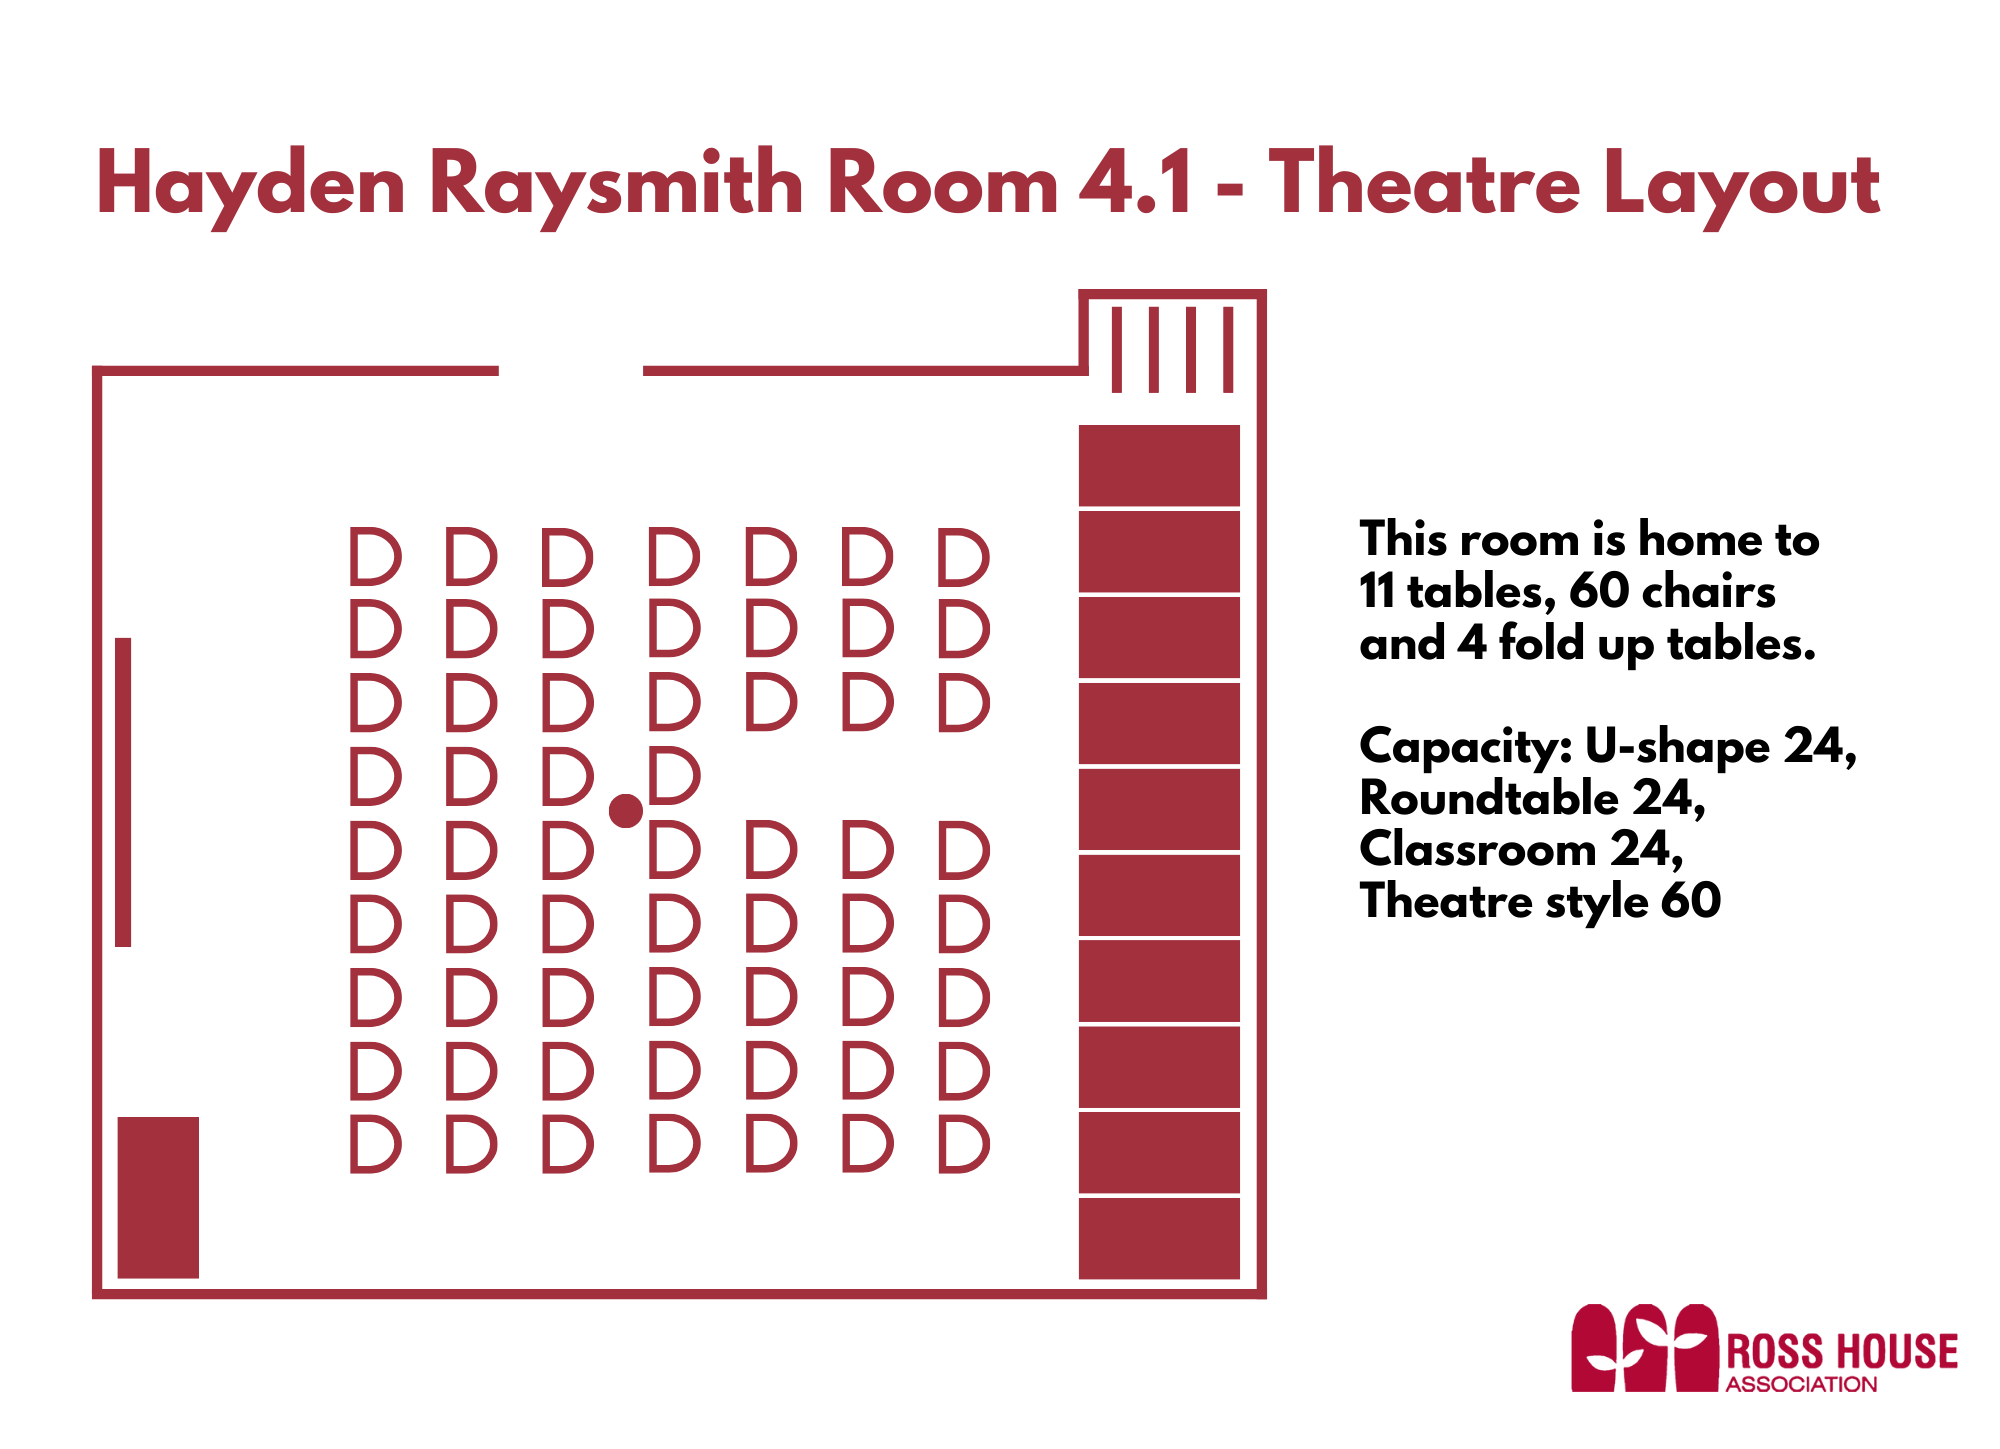 4.1 Hayden Raysmith Room